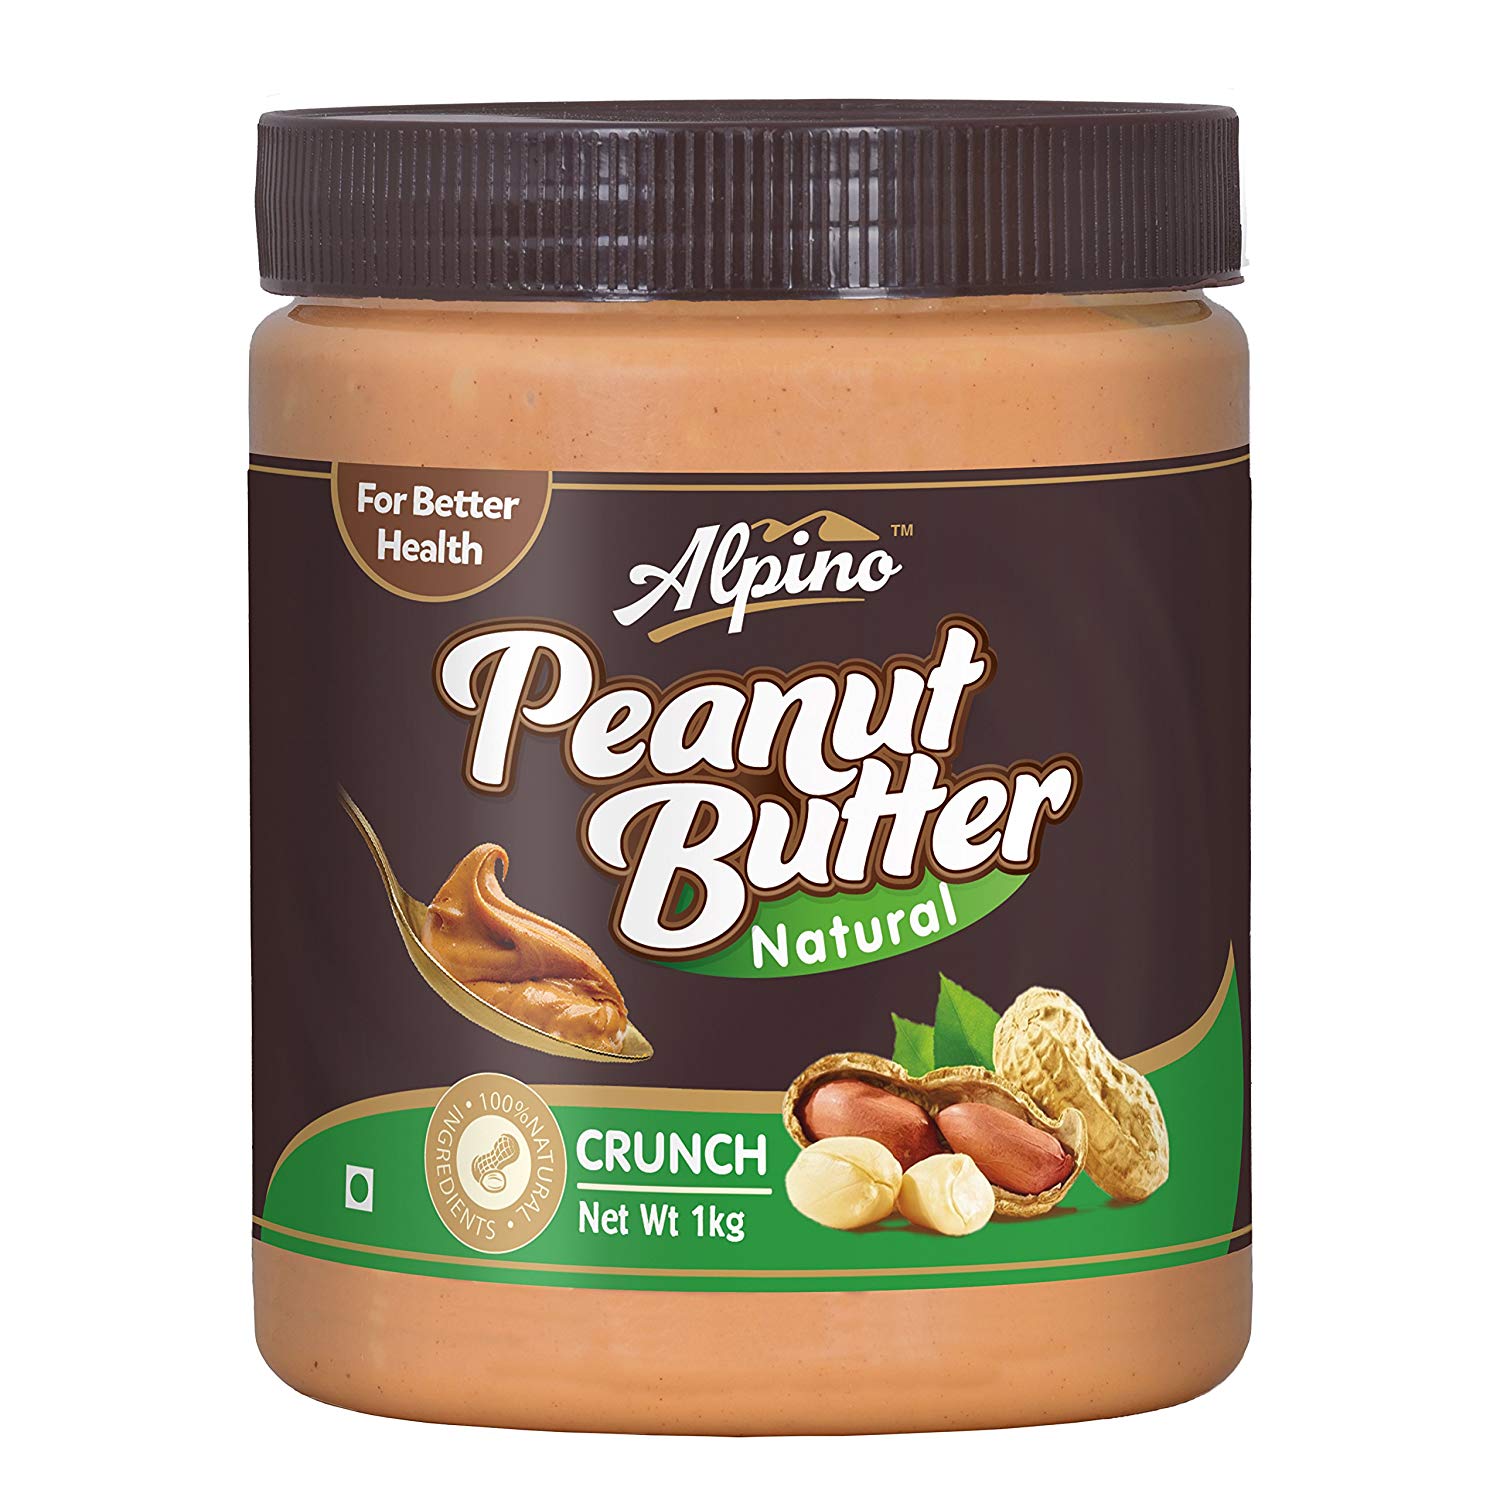 Alpino Natural Peanut Butter